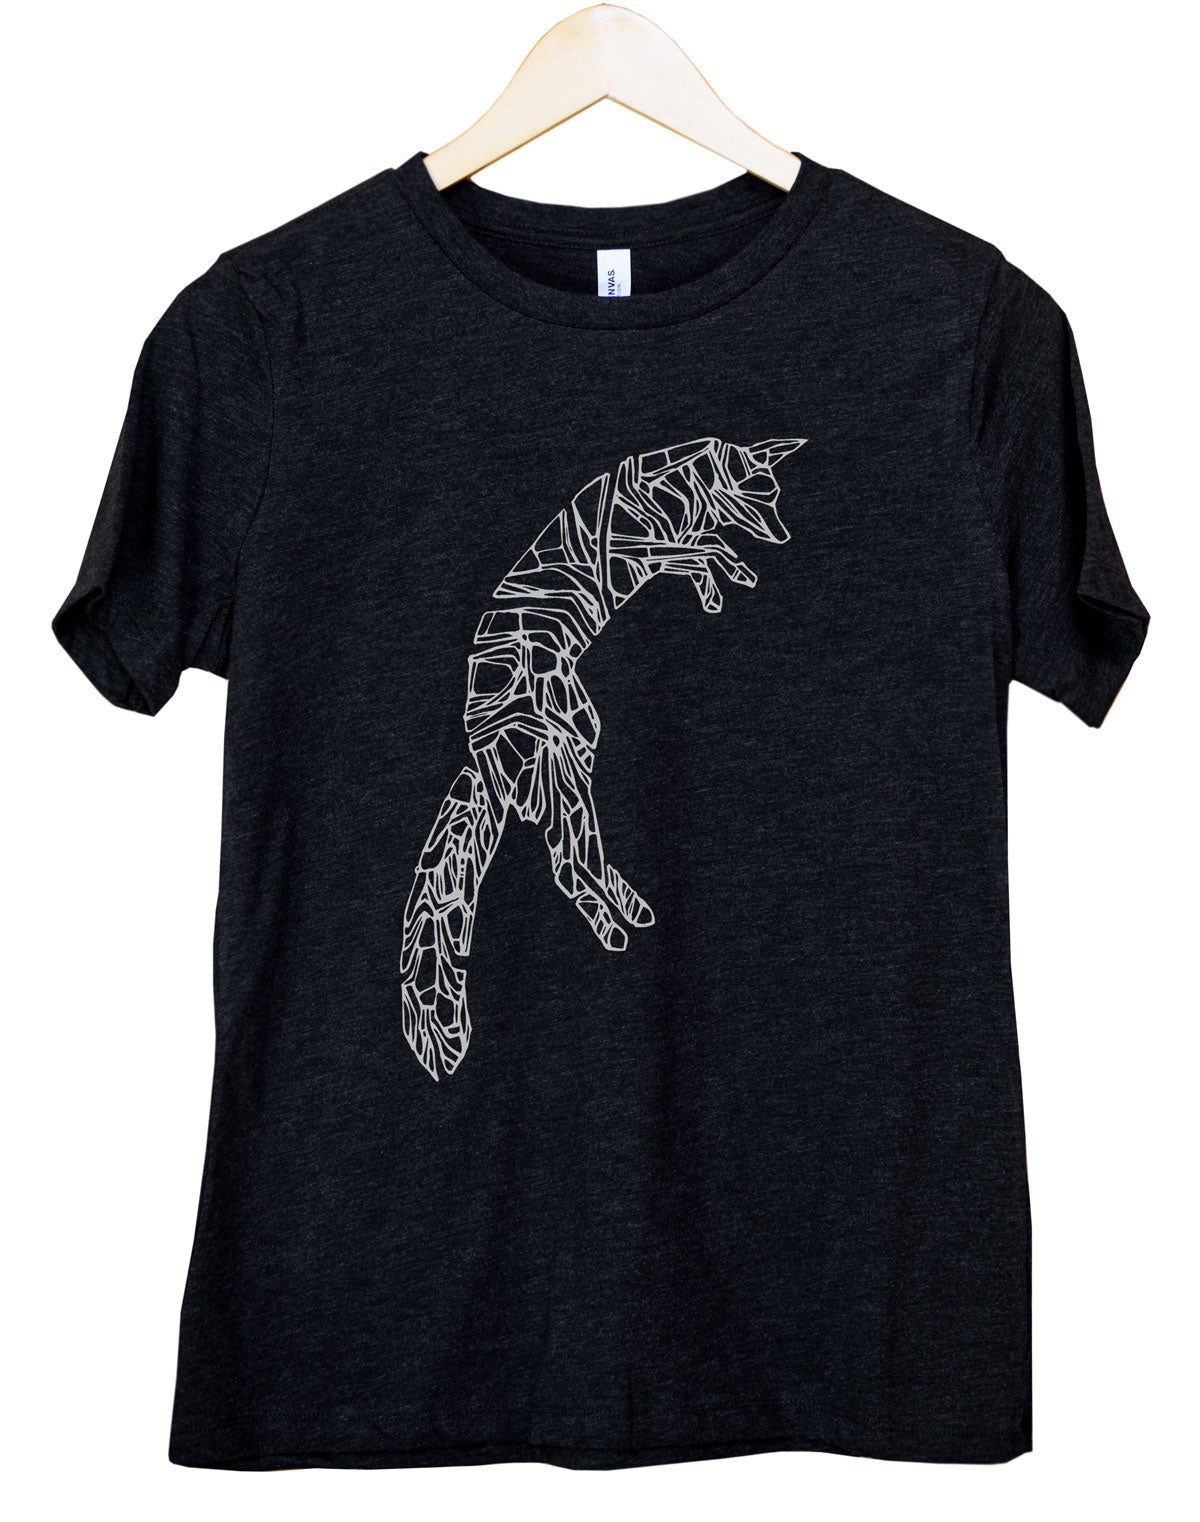 Arctic Fox - Hand Printed Graphic T-Shirt for Women